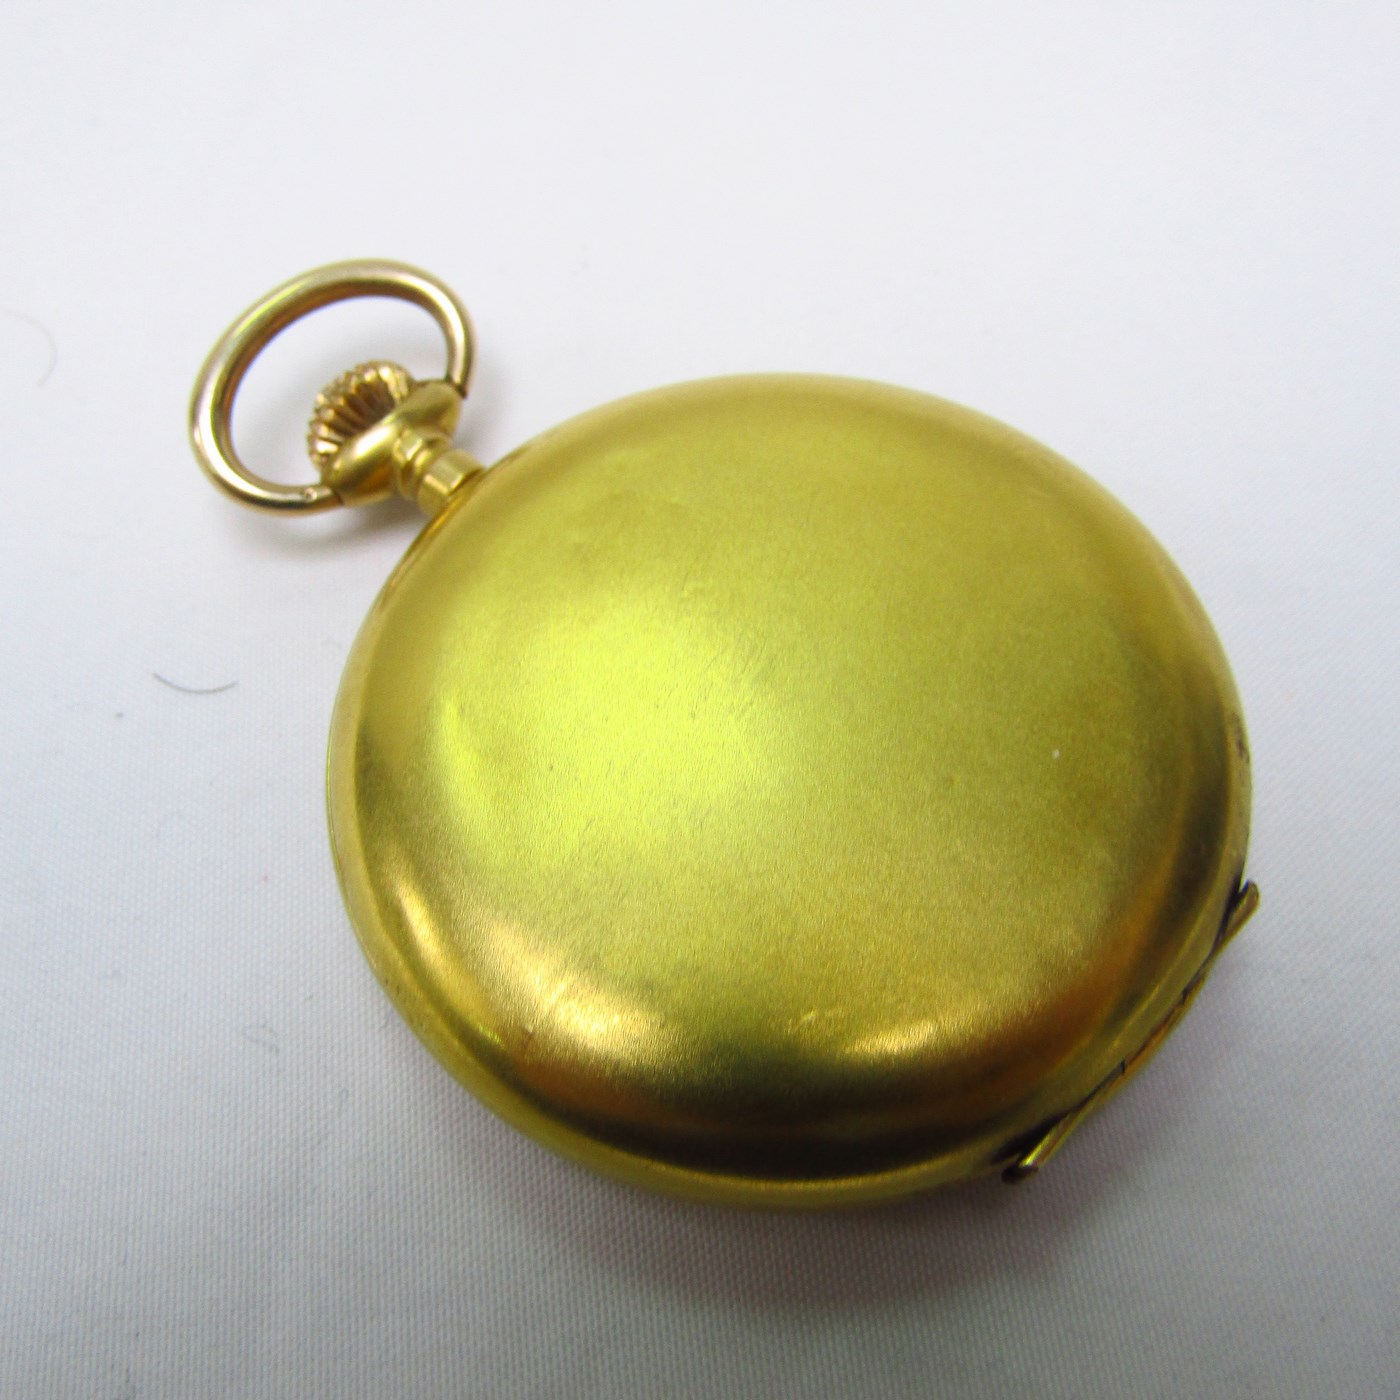 ARTHY. Reloj Suizo de bolsillo, saboneta y remontoir. Ca. 1910.